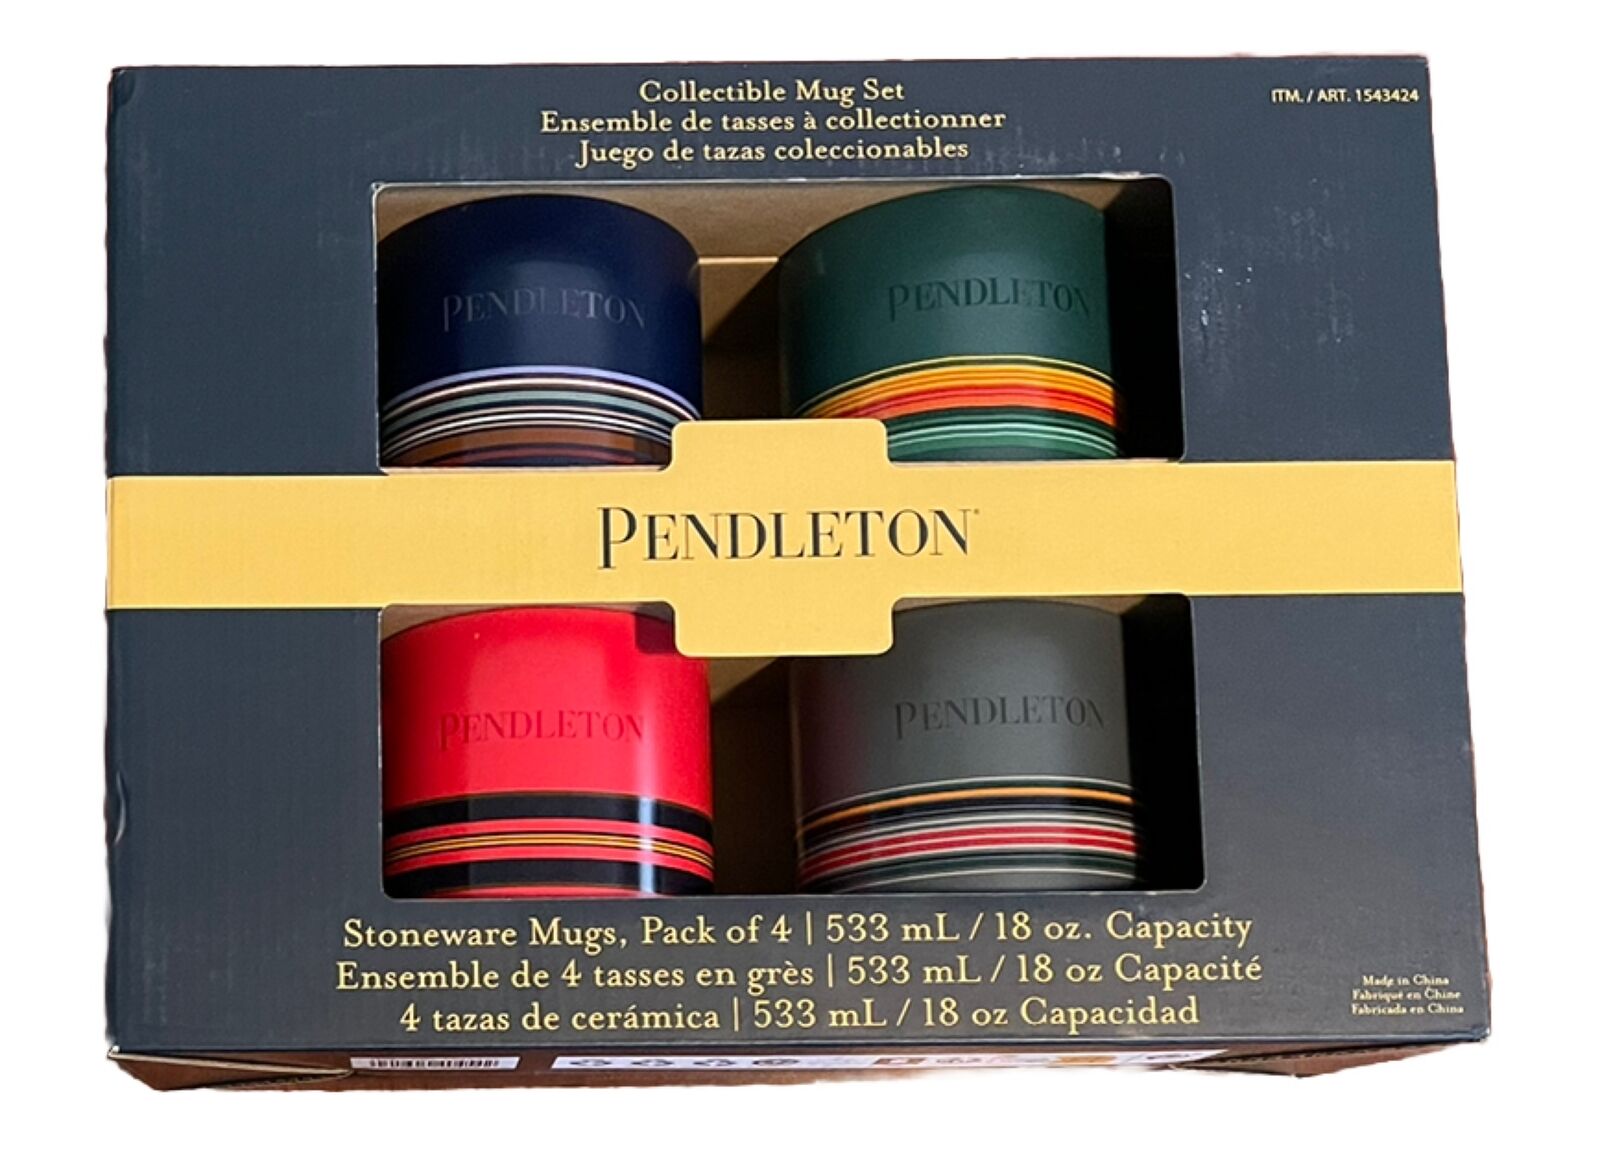 Pendleton National Parks Collectible Stoneware Mugs, 4-Pack 18 oz. capacity.